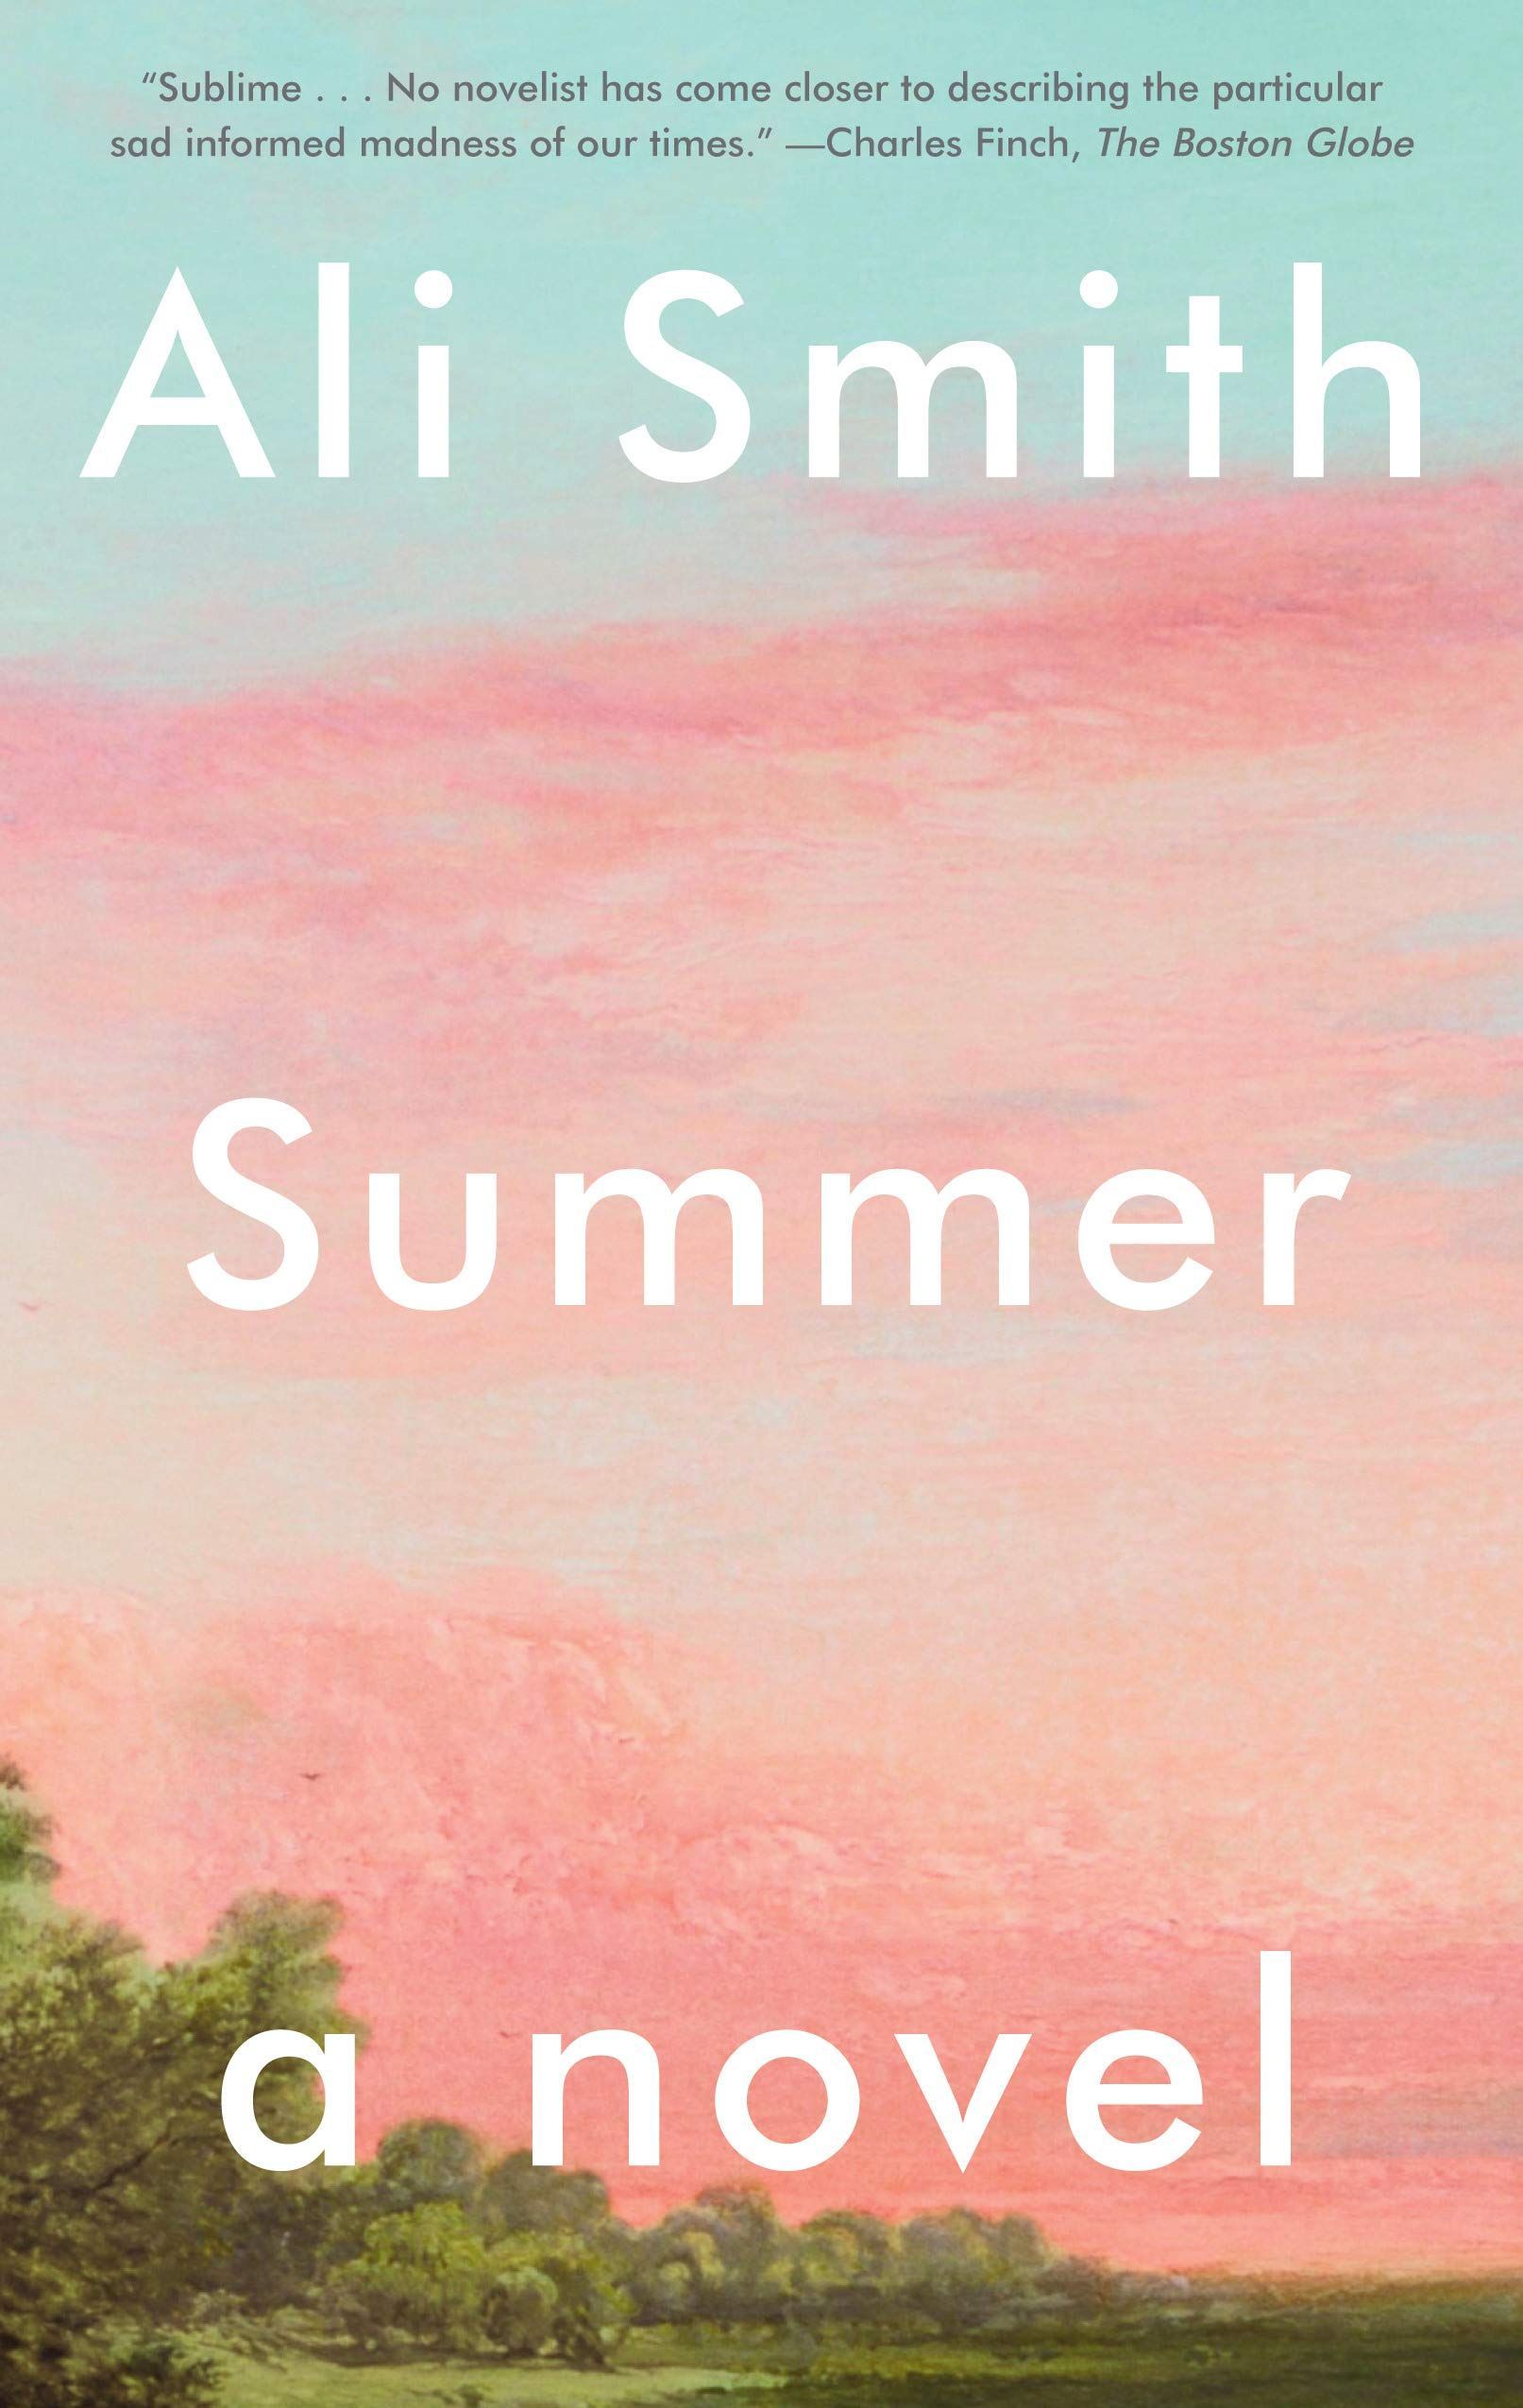 Novel Times: On Ali Smith’s “Summer”